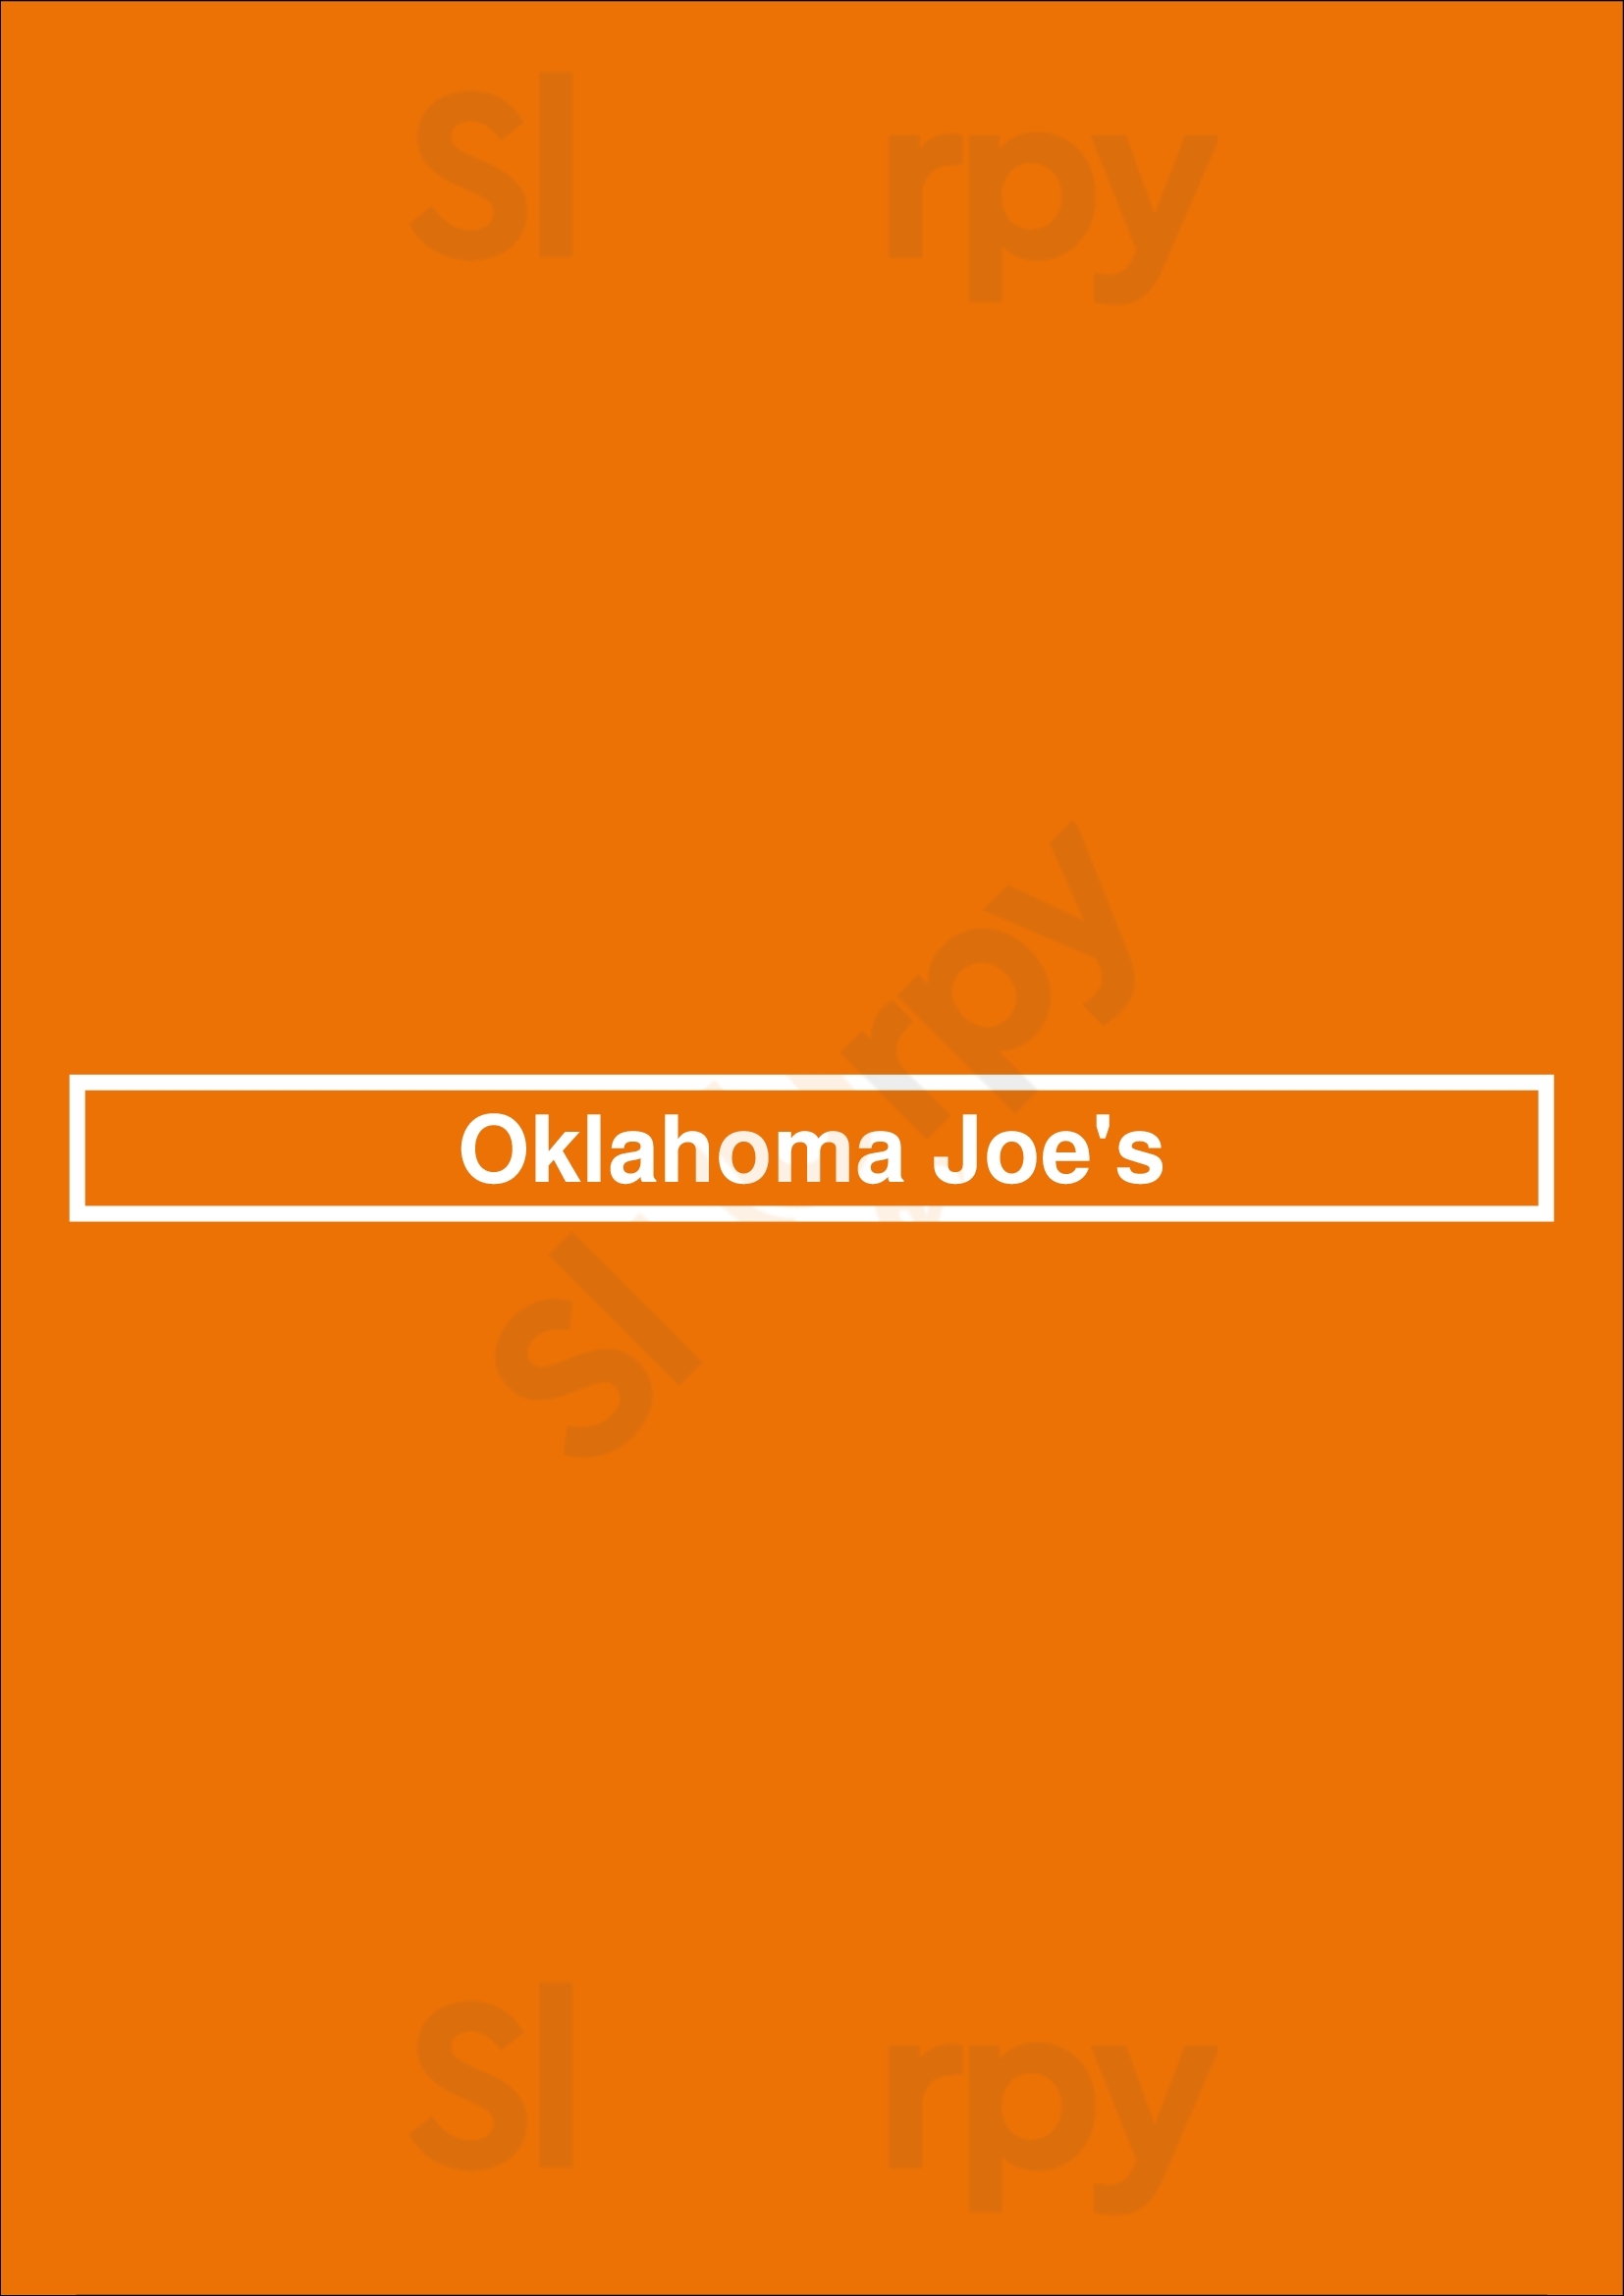 Oklahoma Joe's Omaha Menu - 1